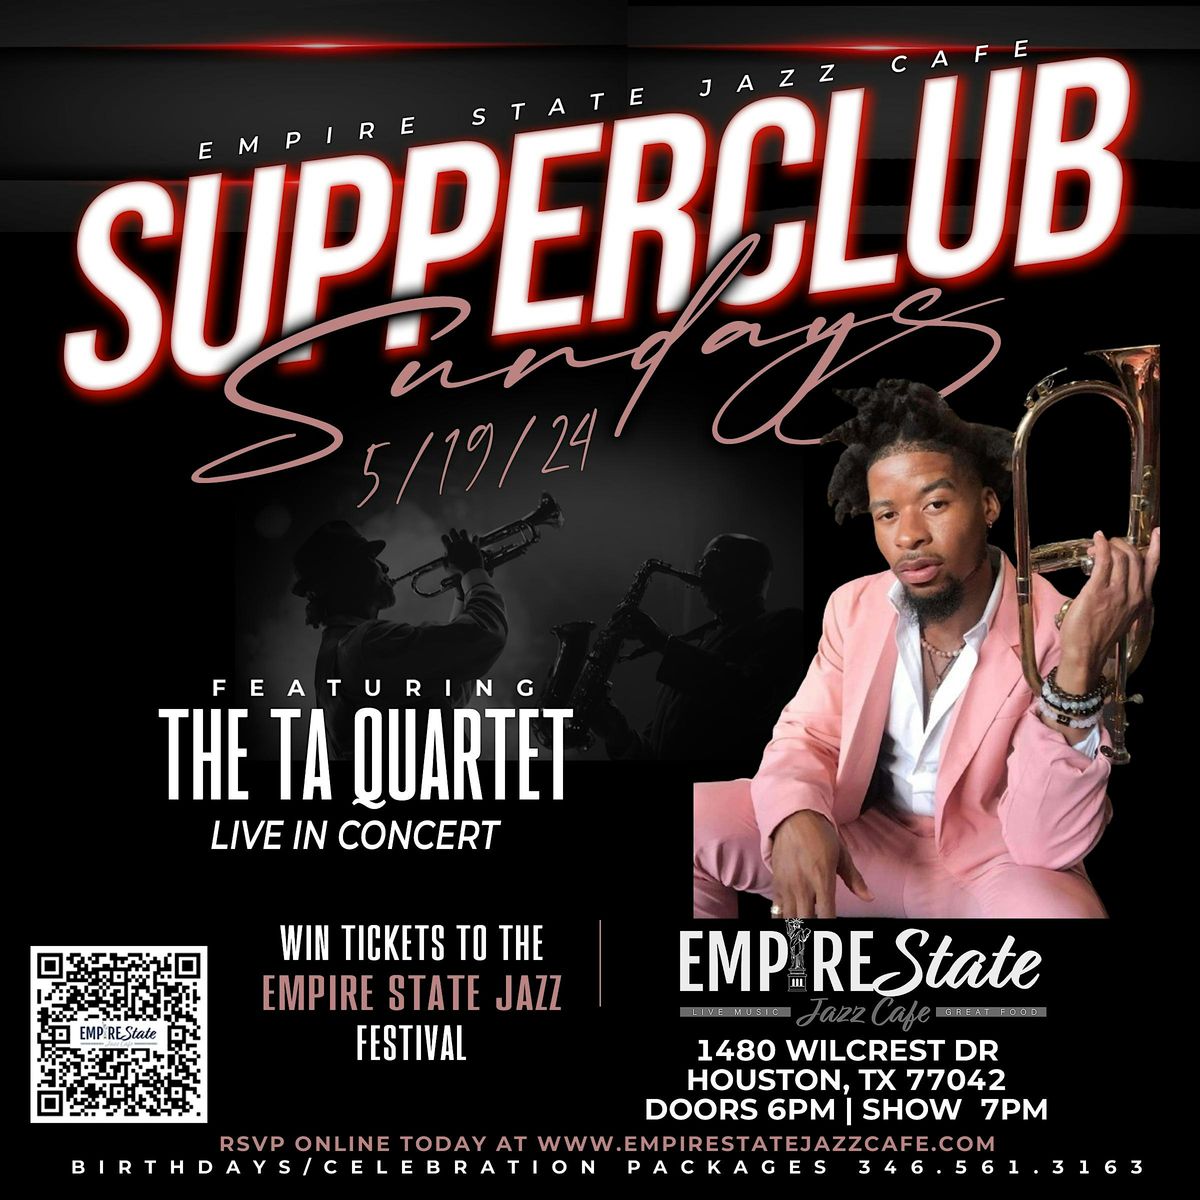 5\/19 - Supper Club Sundays with The TA Quartet